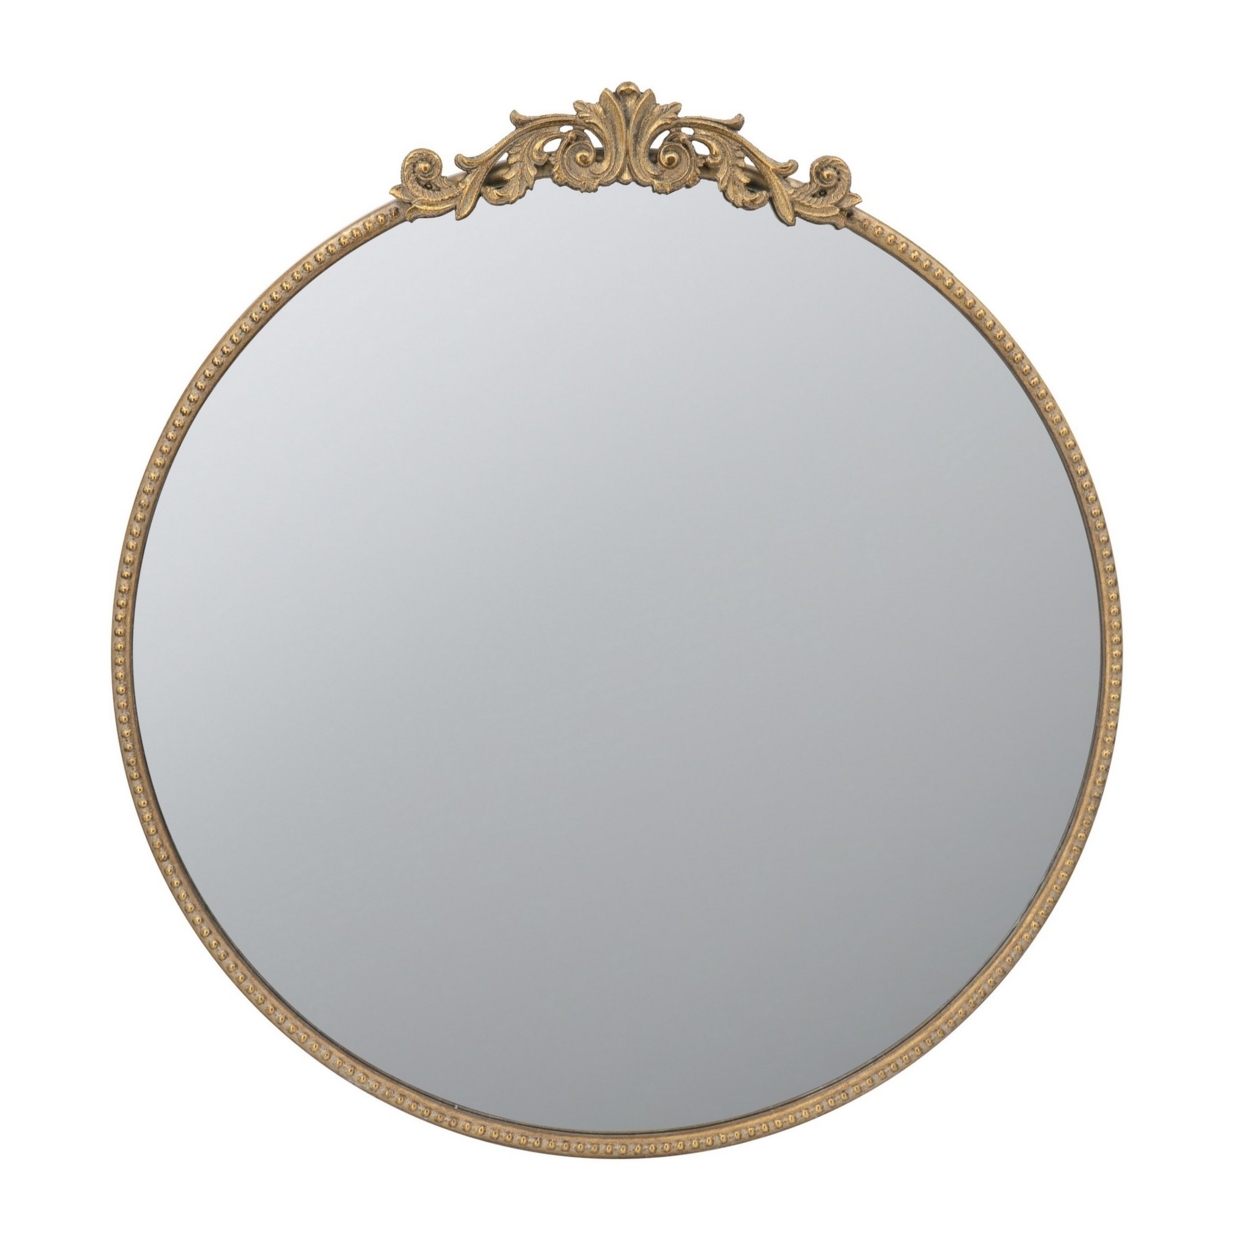 Kea 32 Inch Vintage Round Wall Mirror, Gold Metal Frame, Baroque Design- Saltoro Sherpi